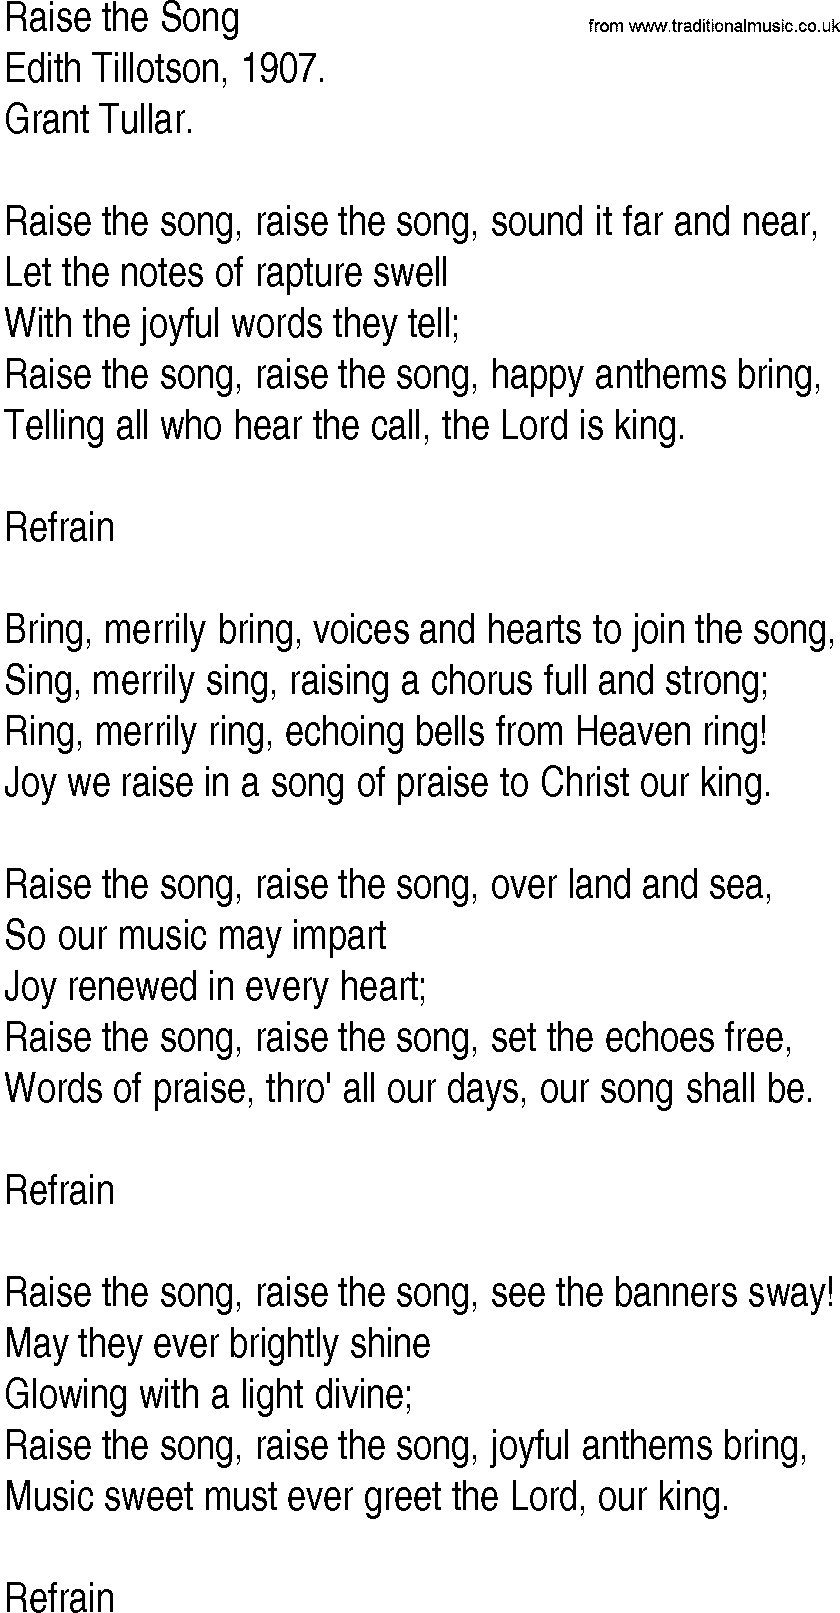 Hymn and Gospel Song: Raise the Song by Edith Tillotson lyrics